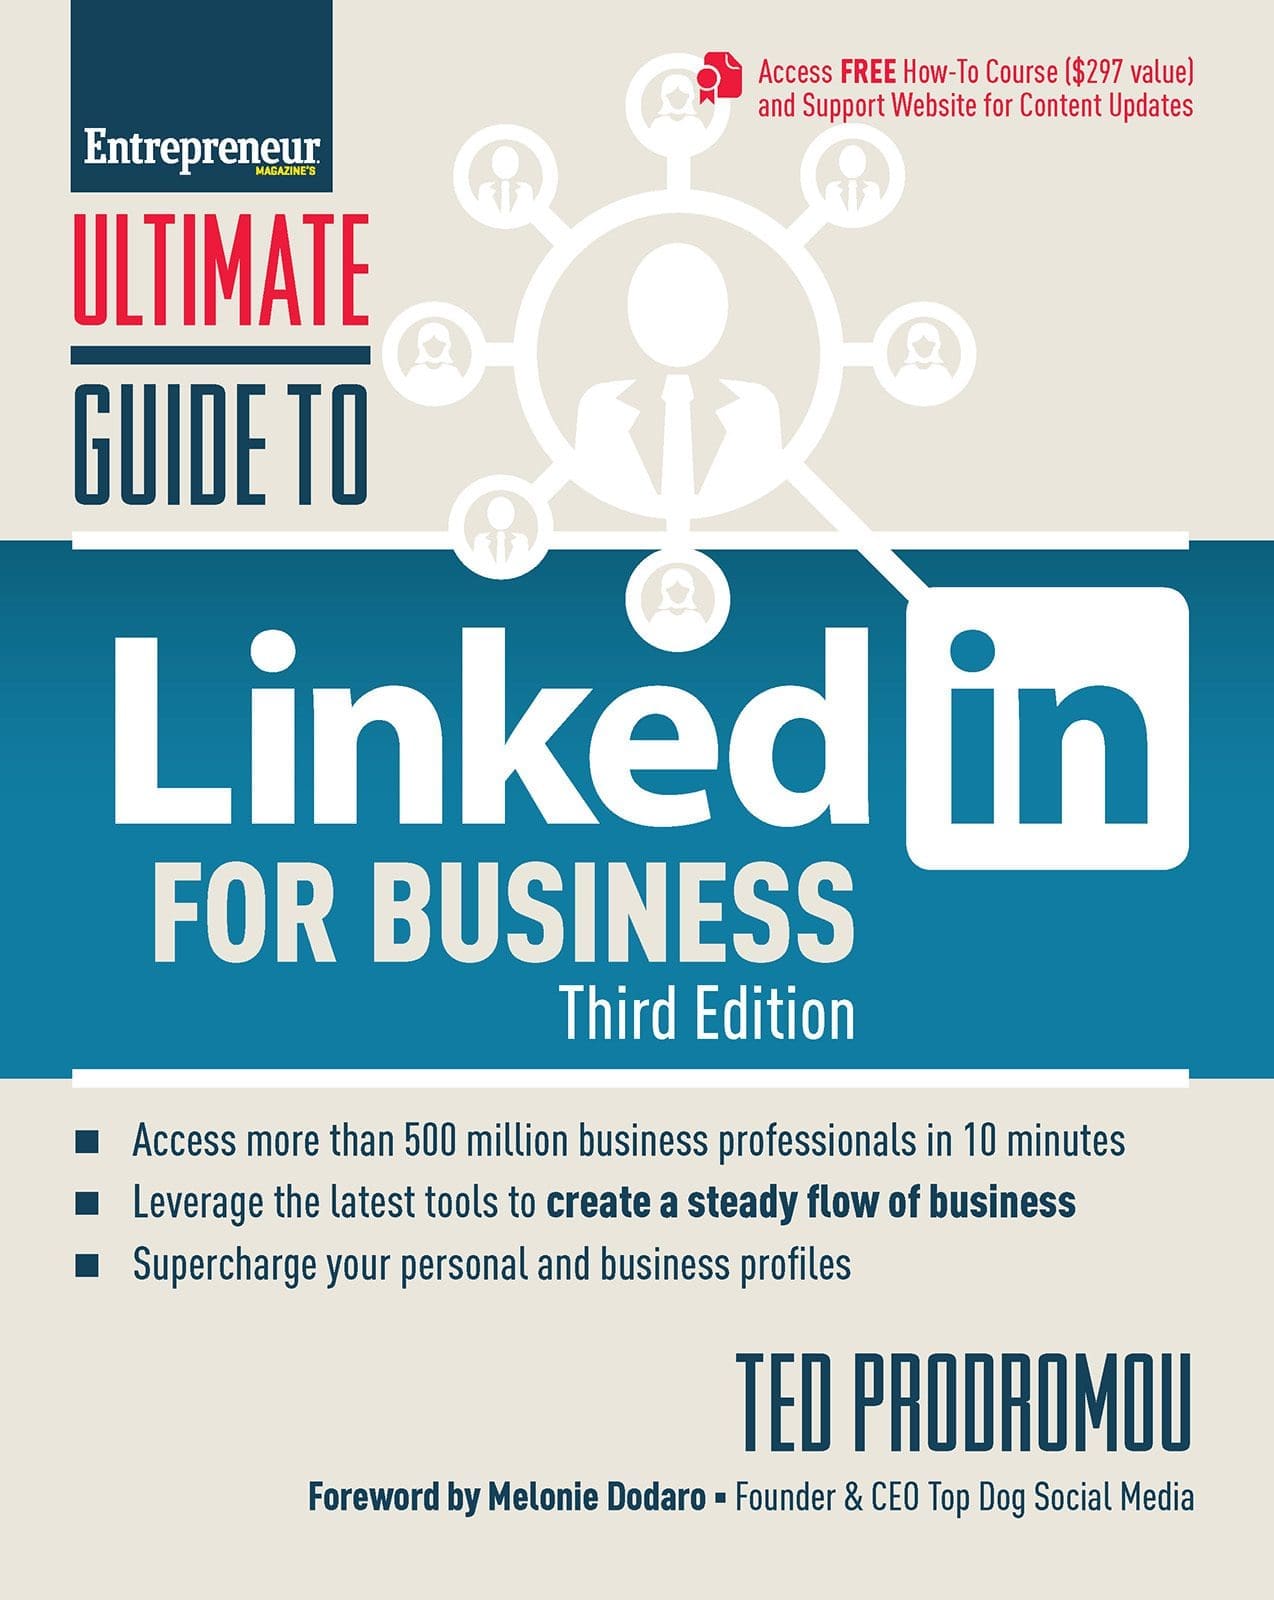 Ted Prodromou's LinkedIn For Business